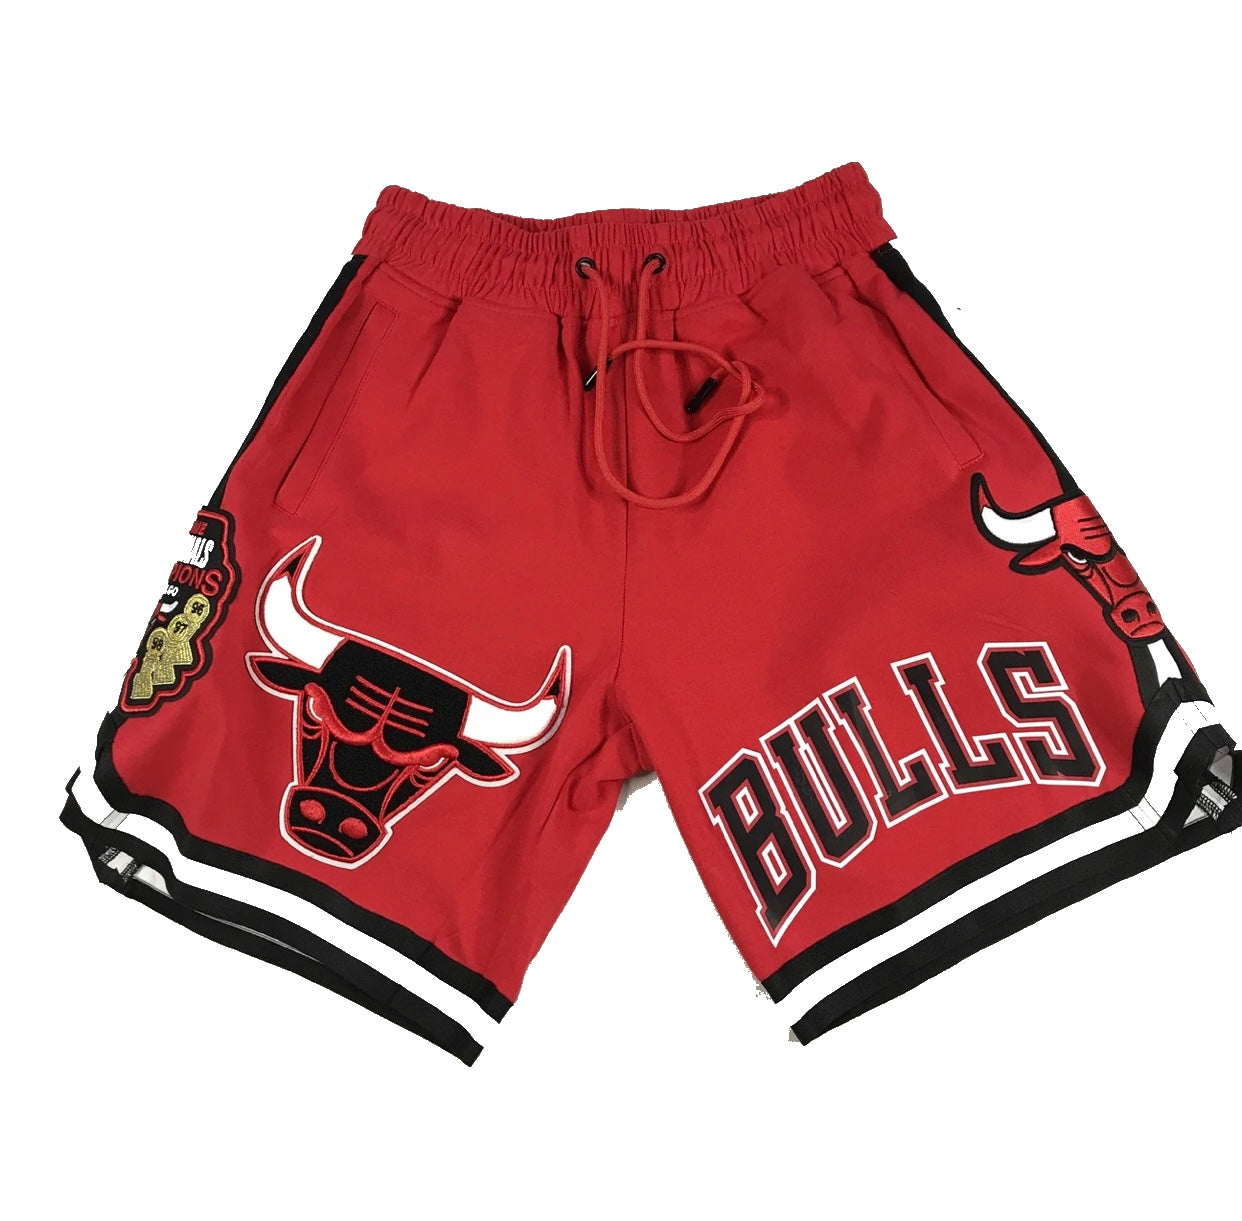 NBA Chicago Bulls Pro Standard Finals Shorts Home White Red Medium x6  Champions 196541046383